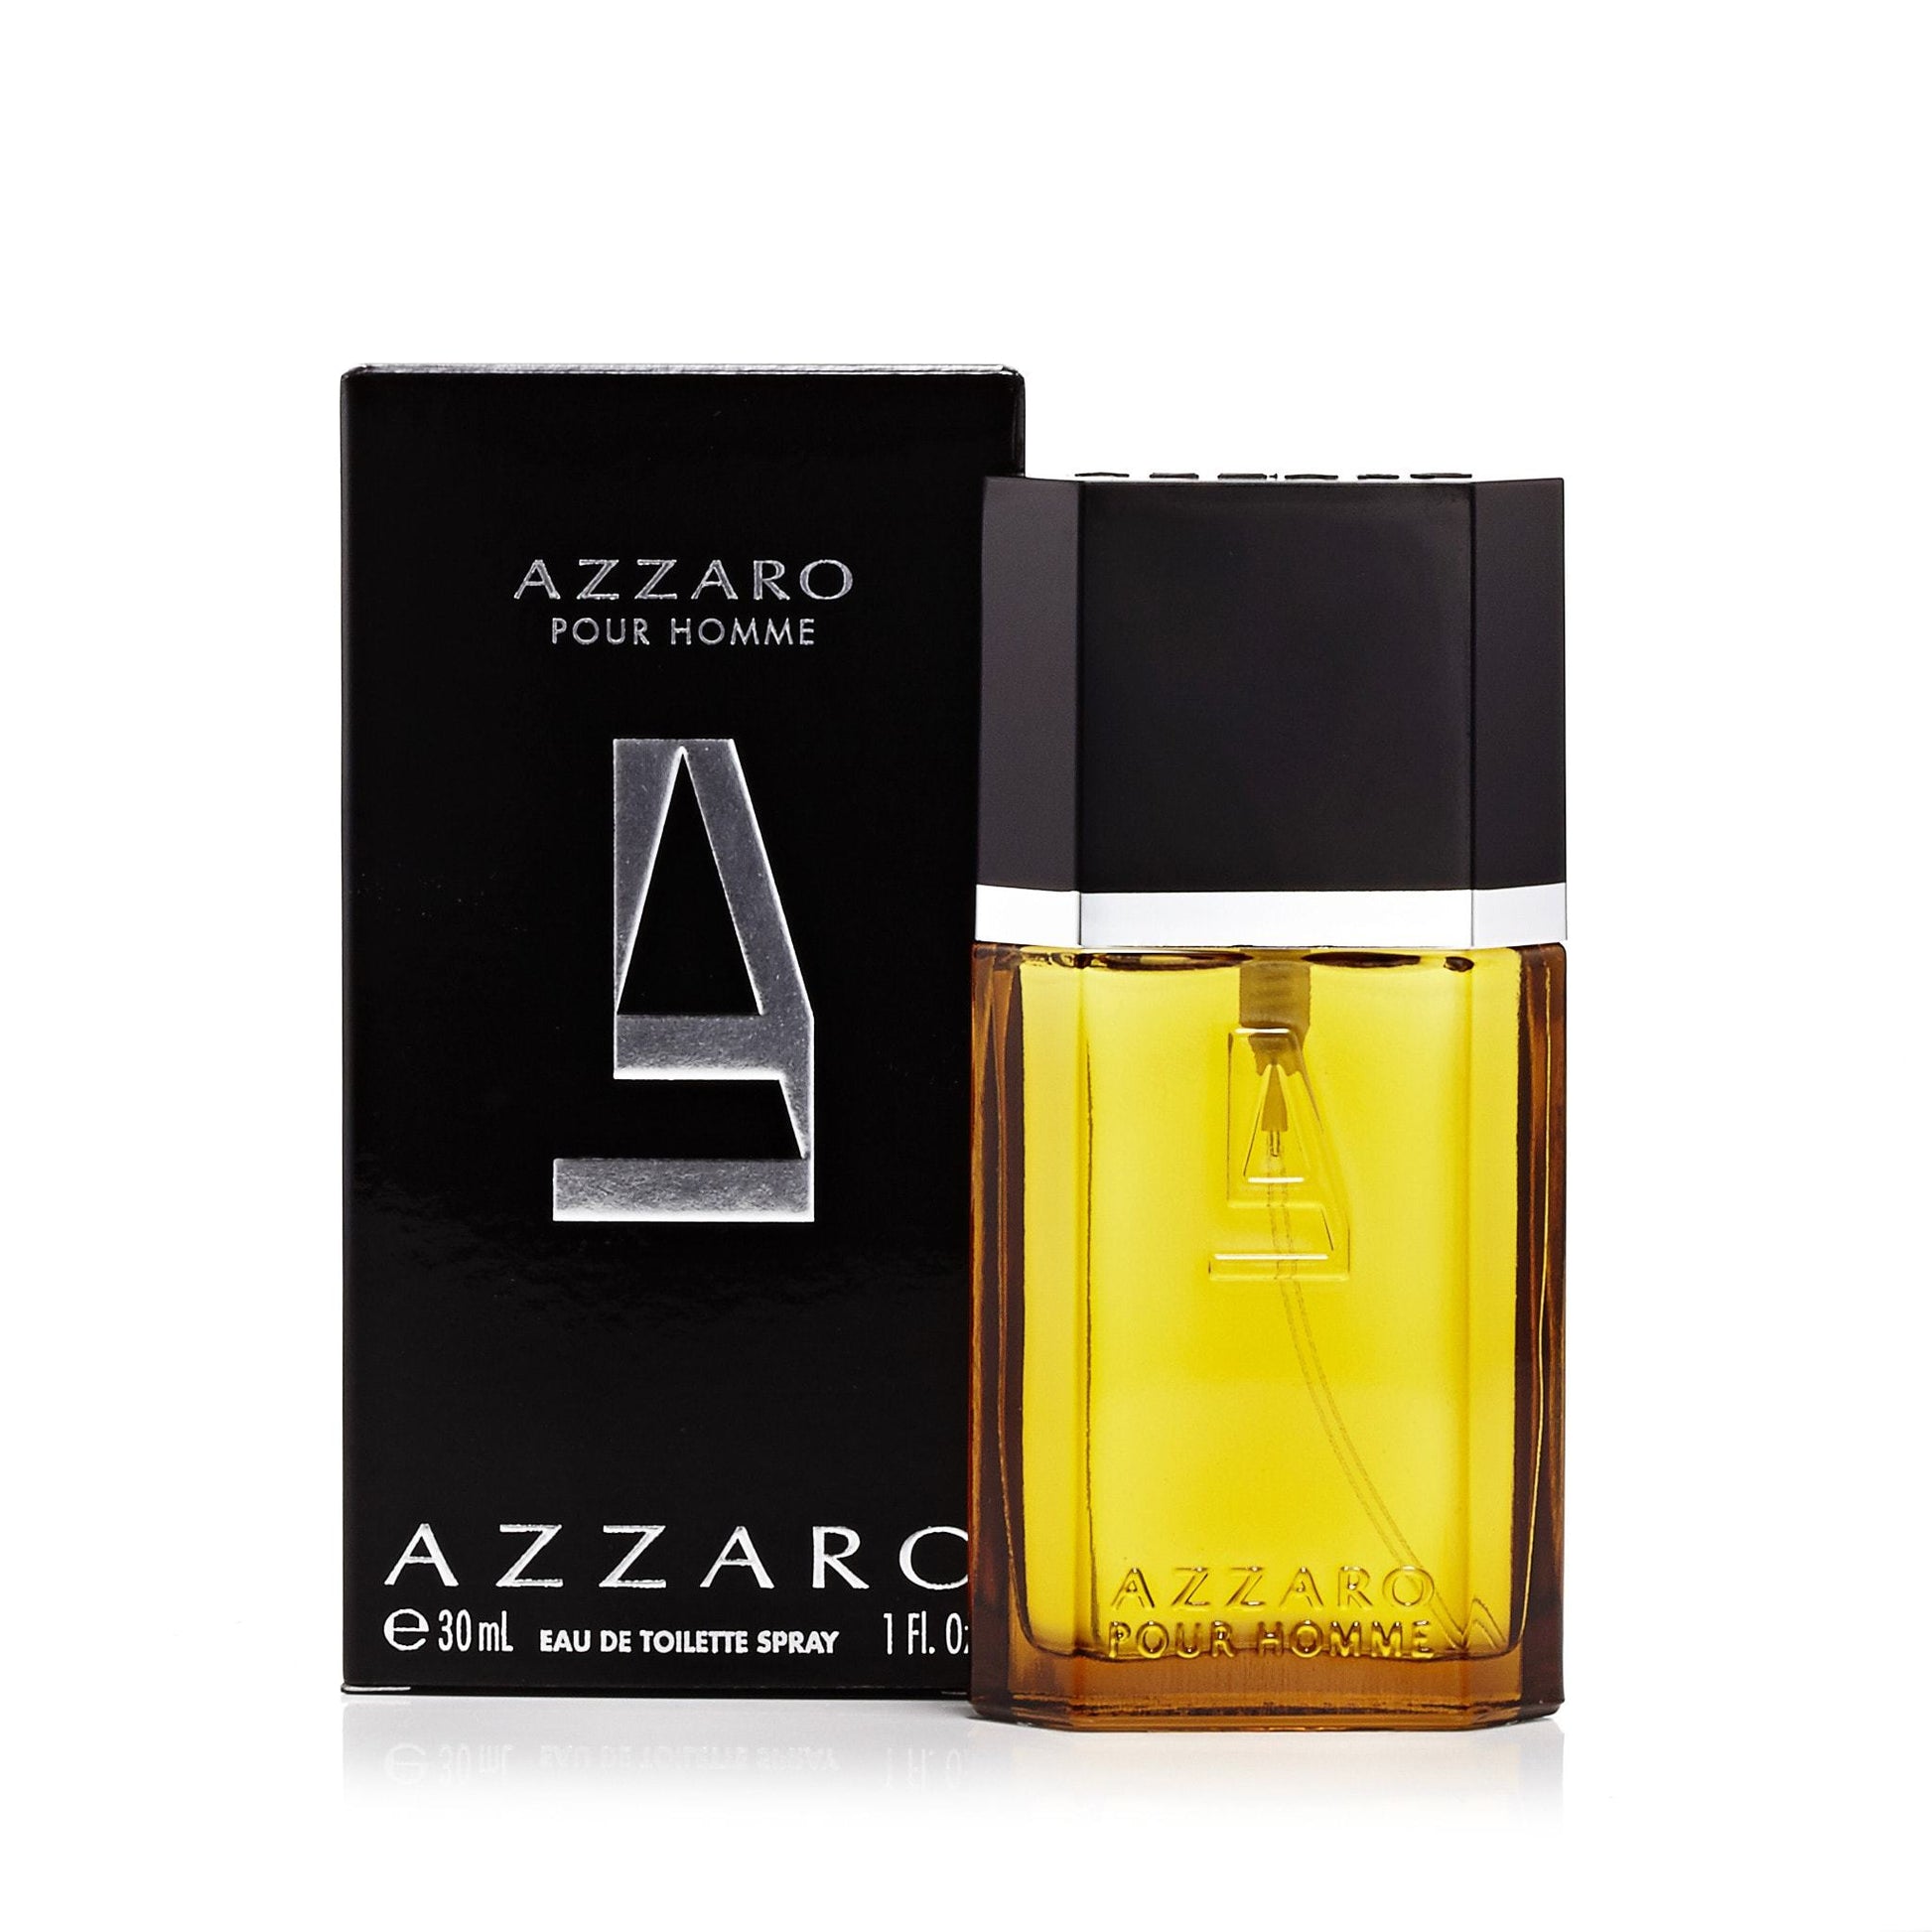 Azzaro Eau de Toilette Spray for Men by Azzaro, Product image 1